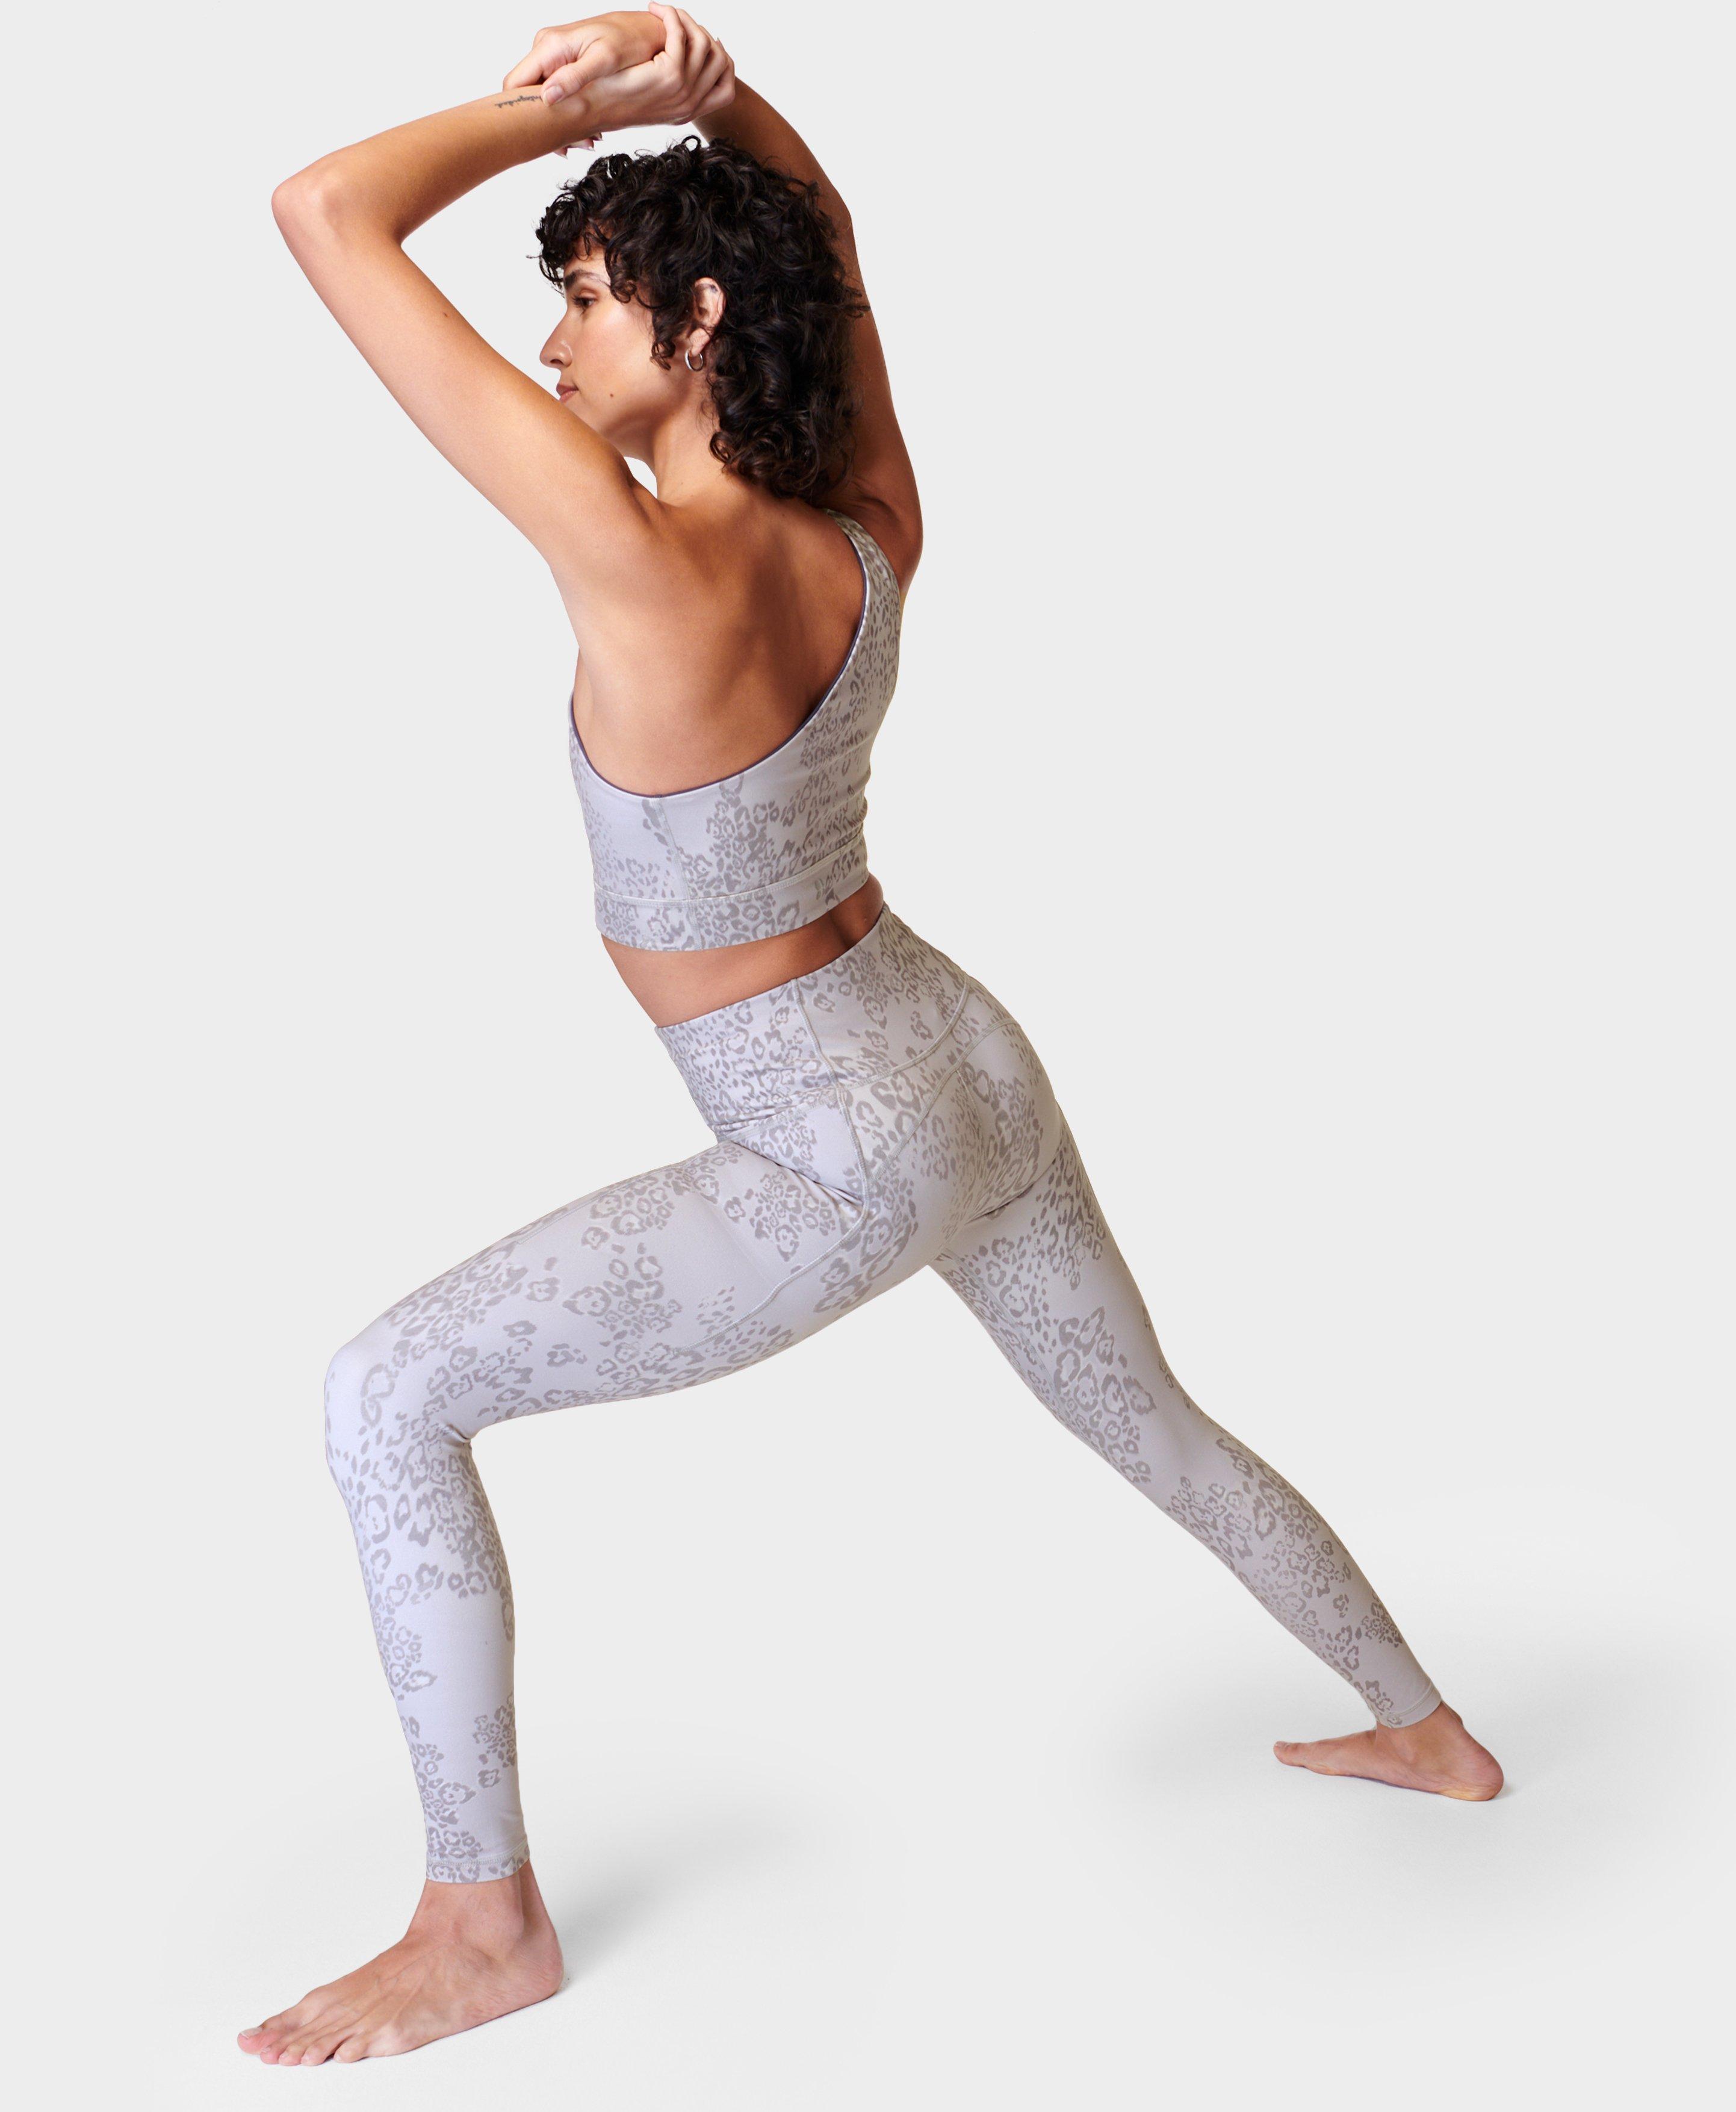 NWT Womens PrAna Yoga Pilates Strappy Top and 25 similar items